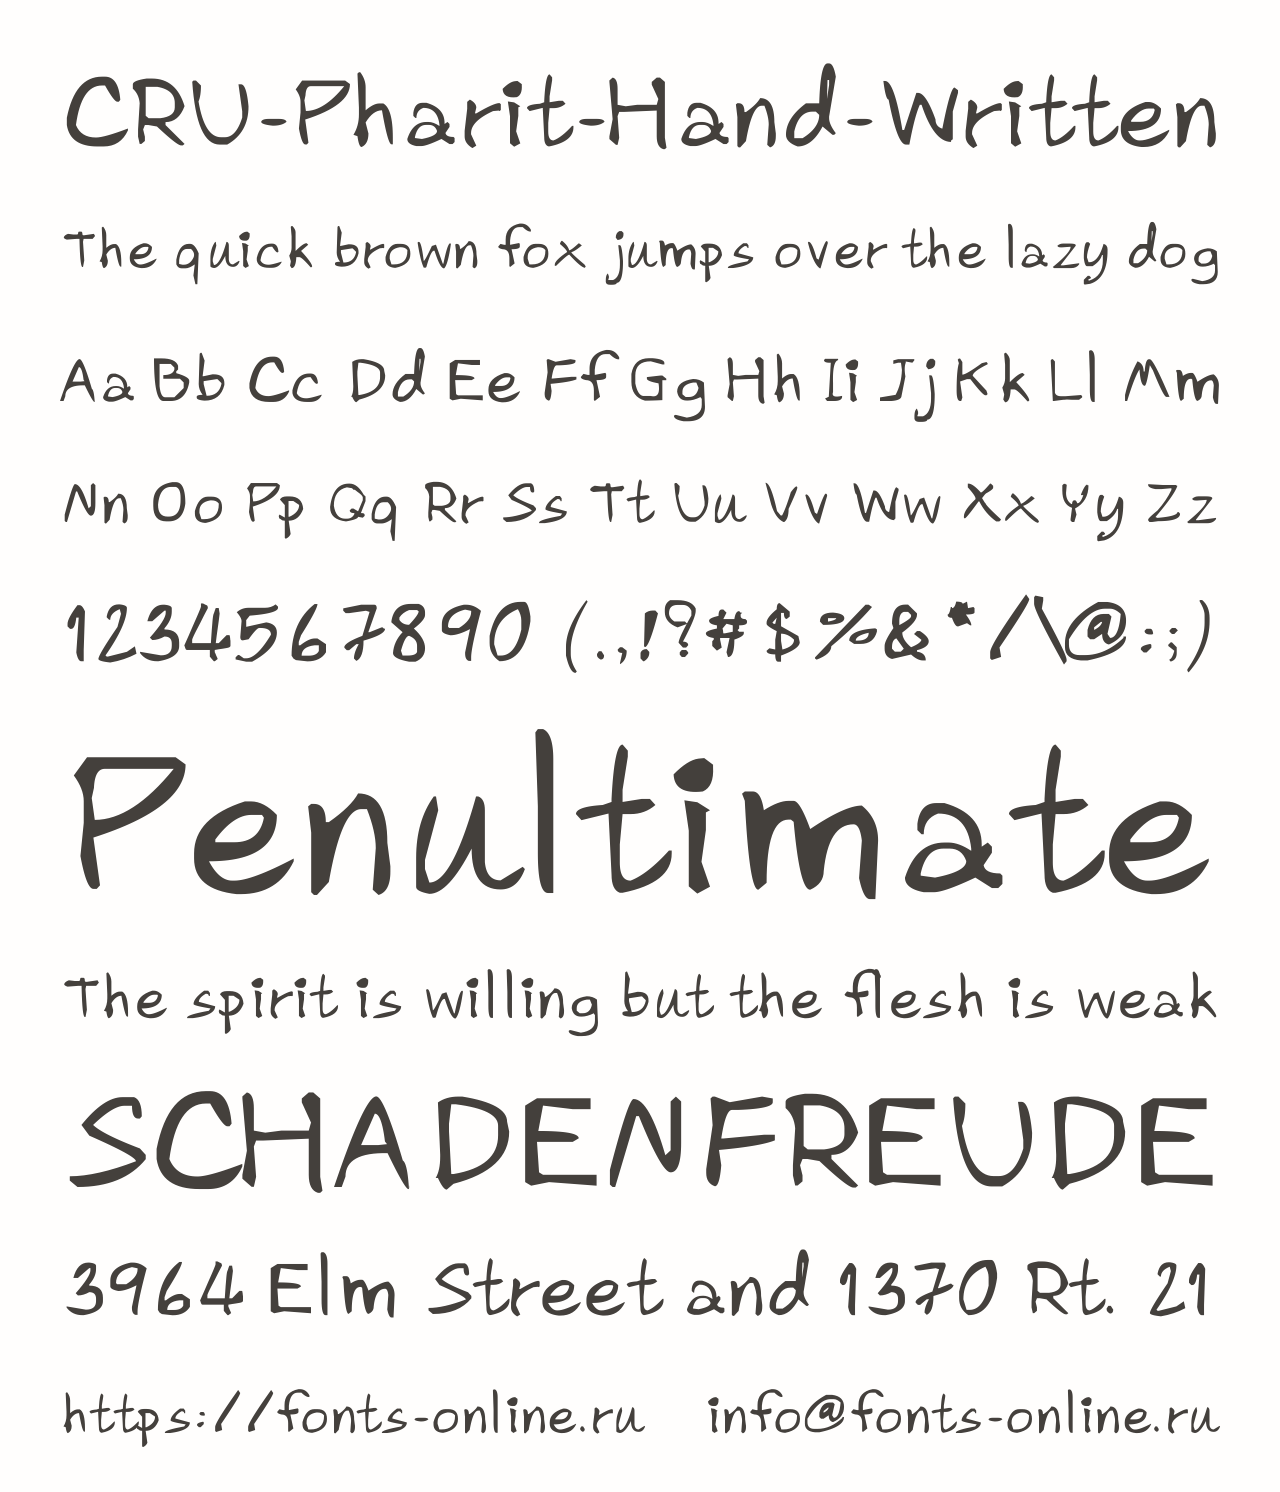 Шрифт CRU-Pharit-Hand-Written